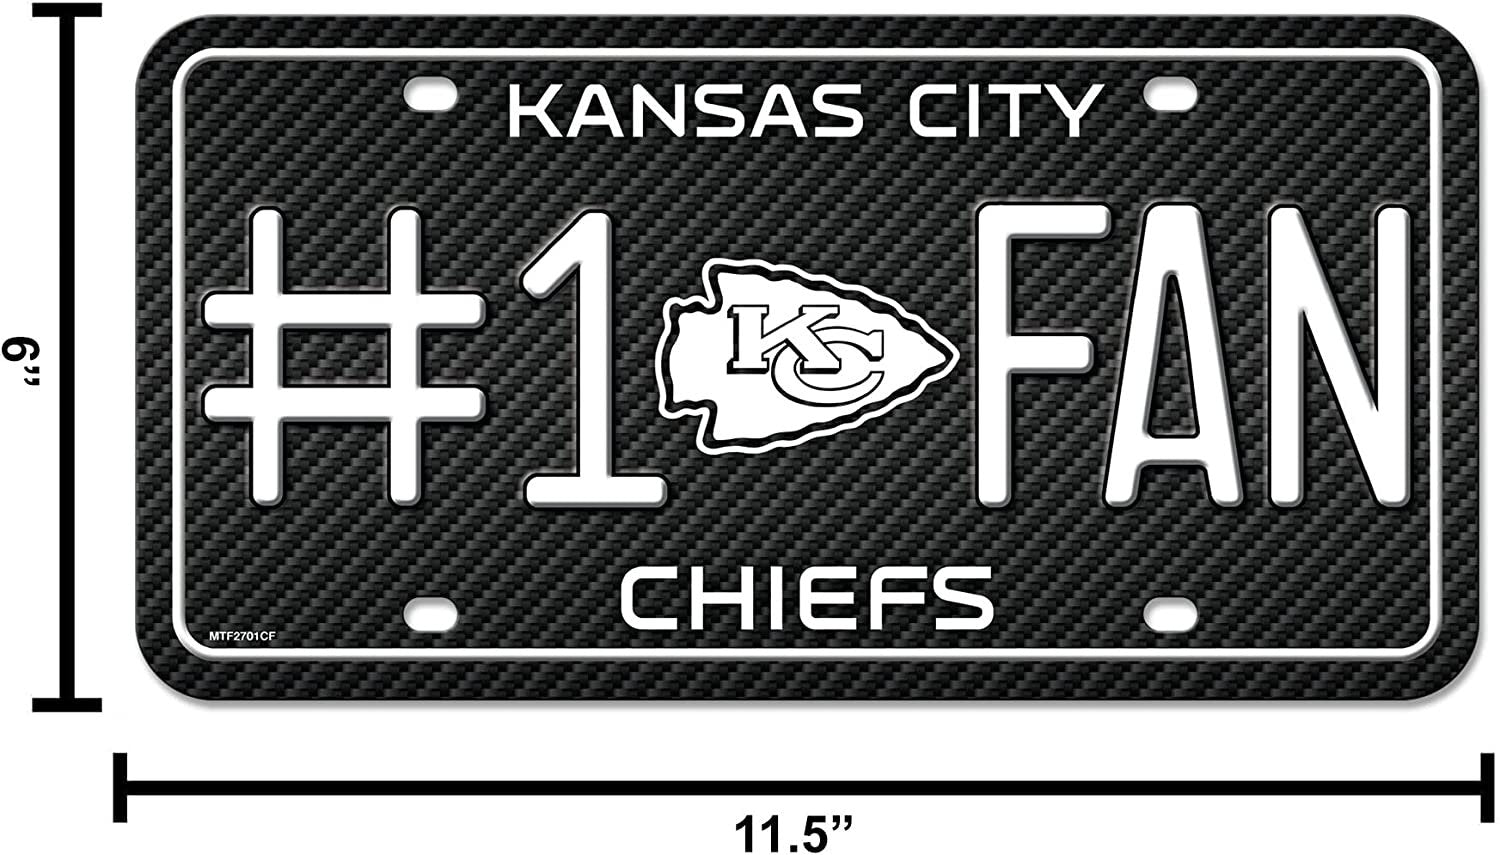 Kansas City Chiefs #1 Fan Metal License Plate Tag Carbon Fiber Design 12x6 Inch